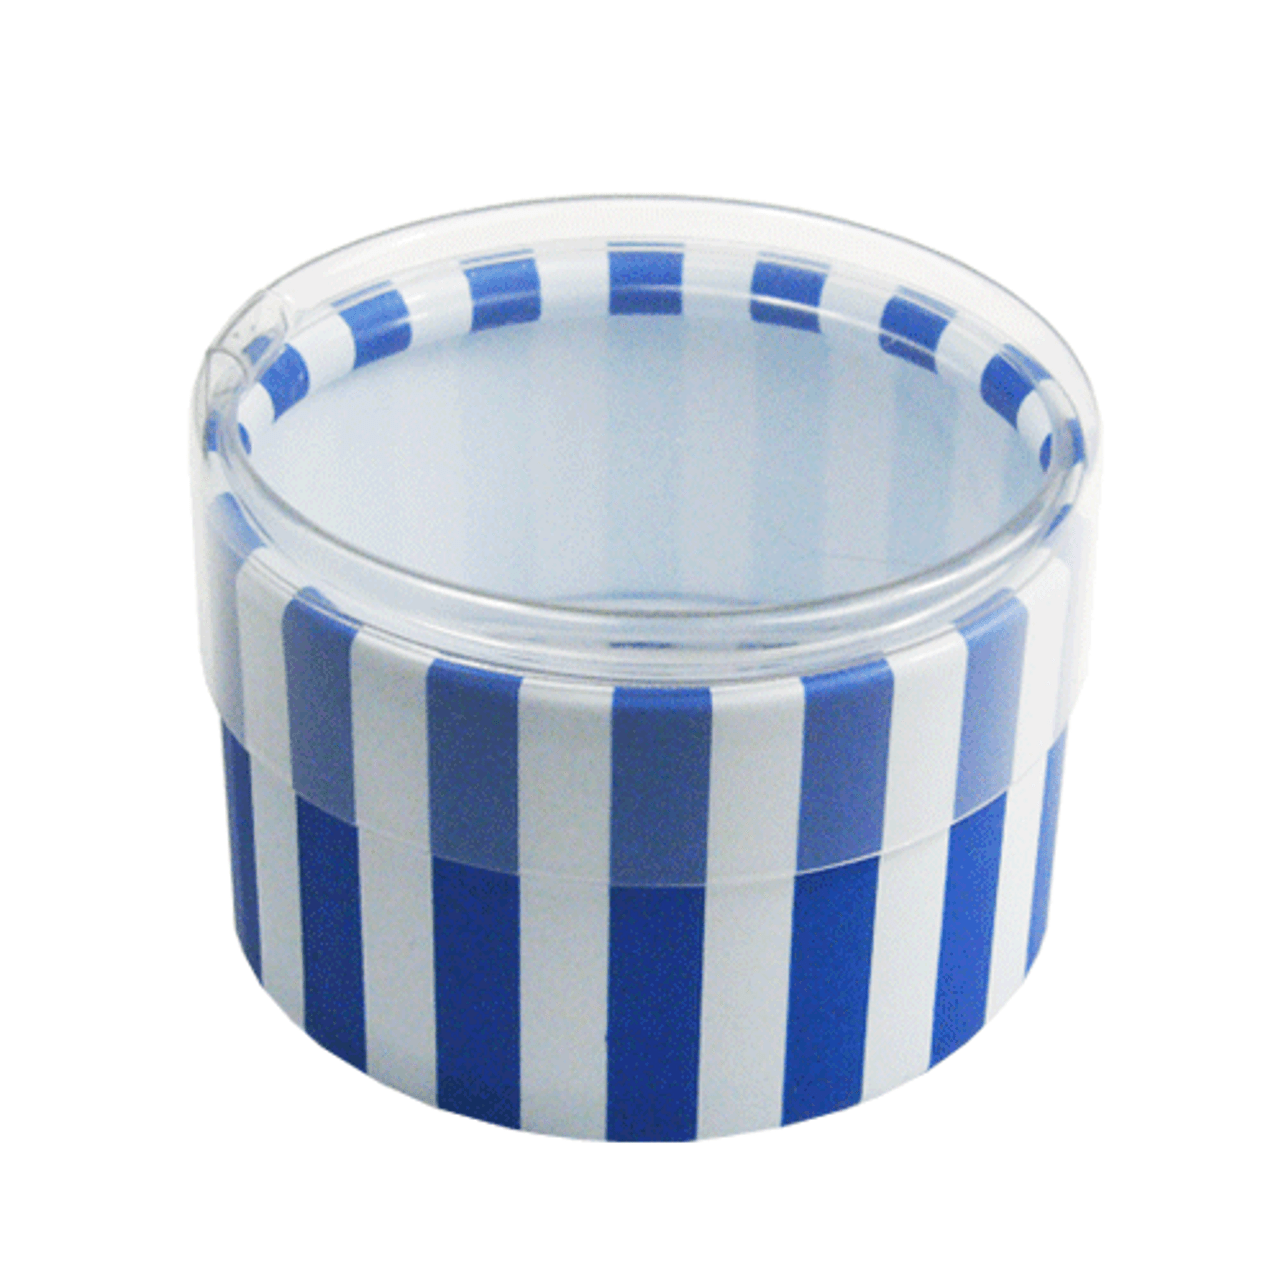 2"dia. x 1"H Cylinder Box-Royal Blue Stripes